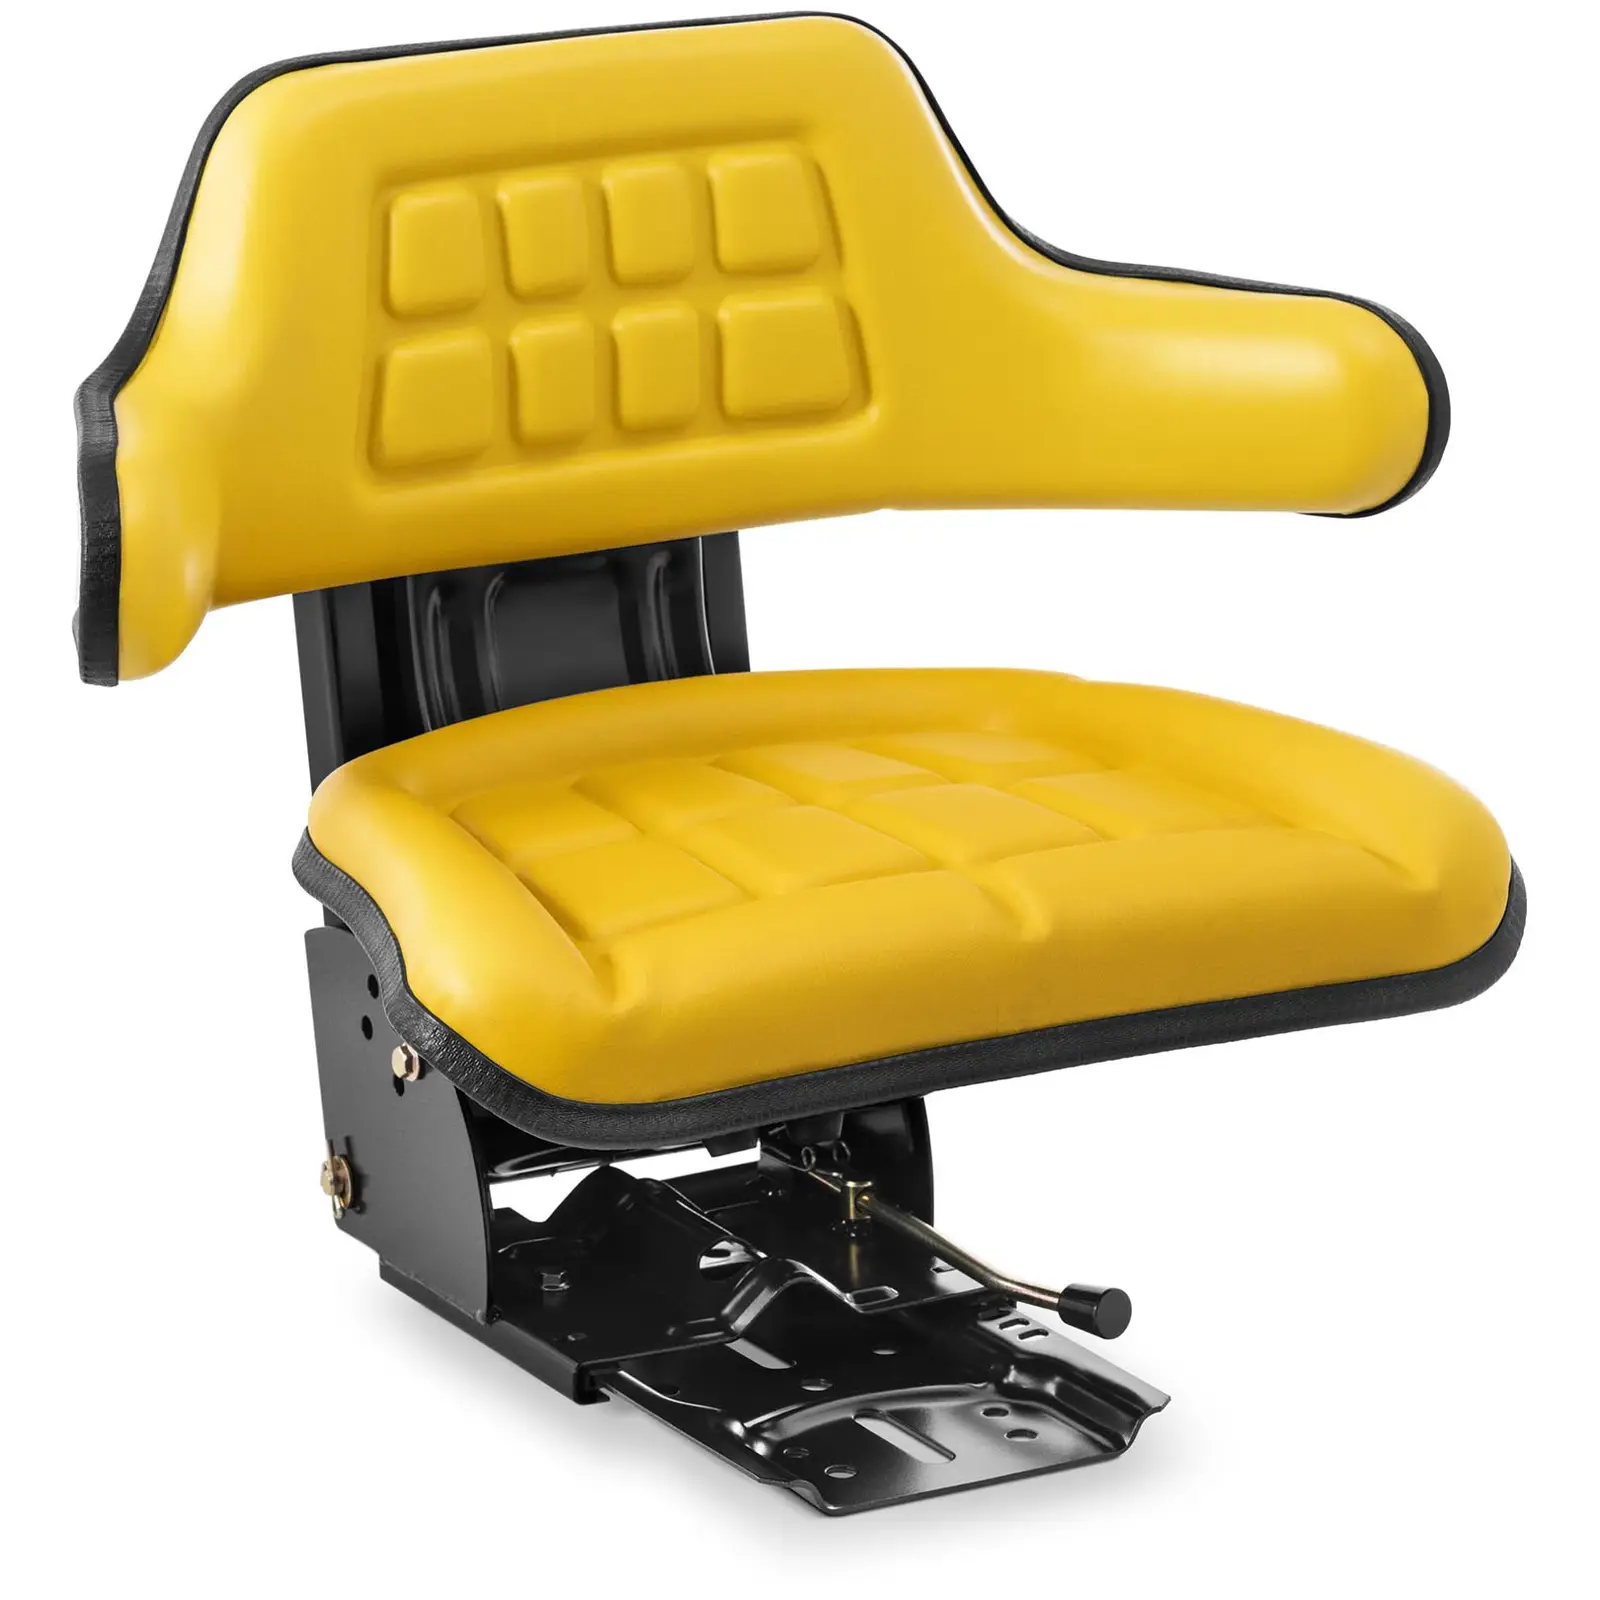 Tractor Seat - 49 x 35 cm - Suspension 80 mm - adjustable